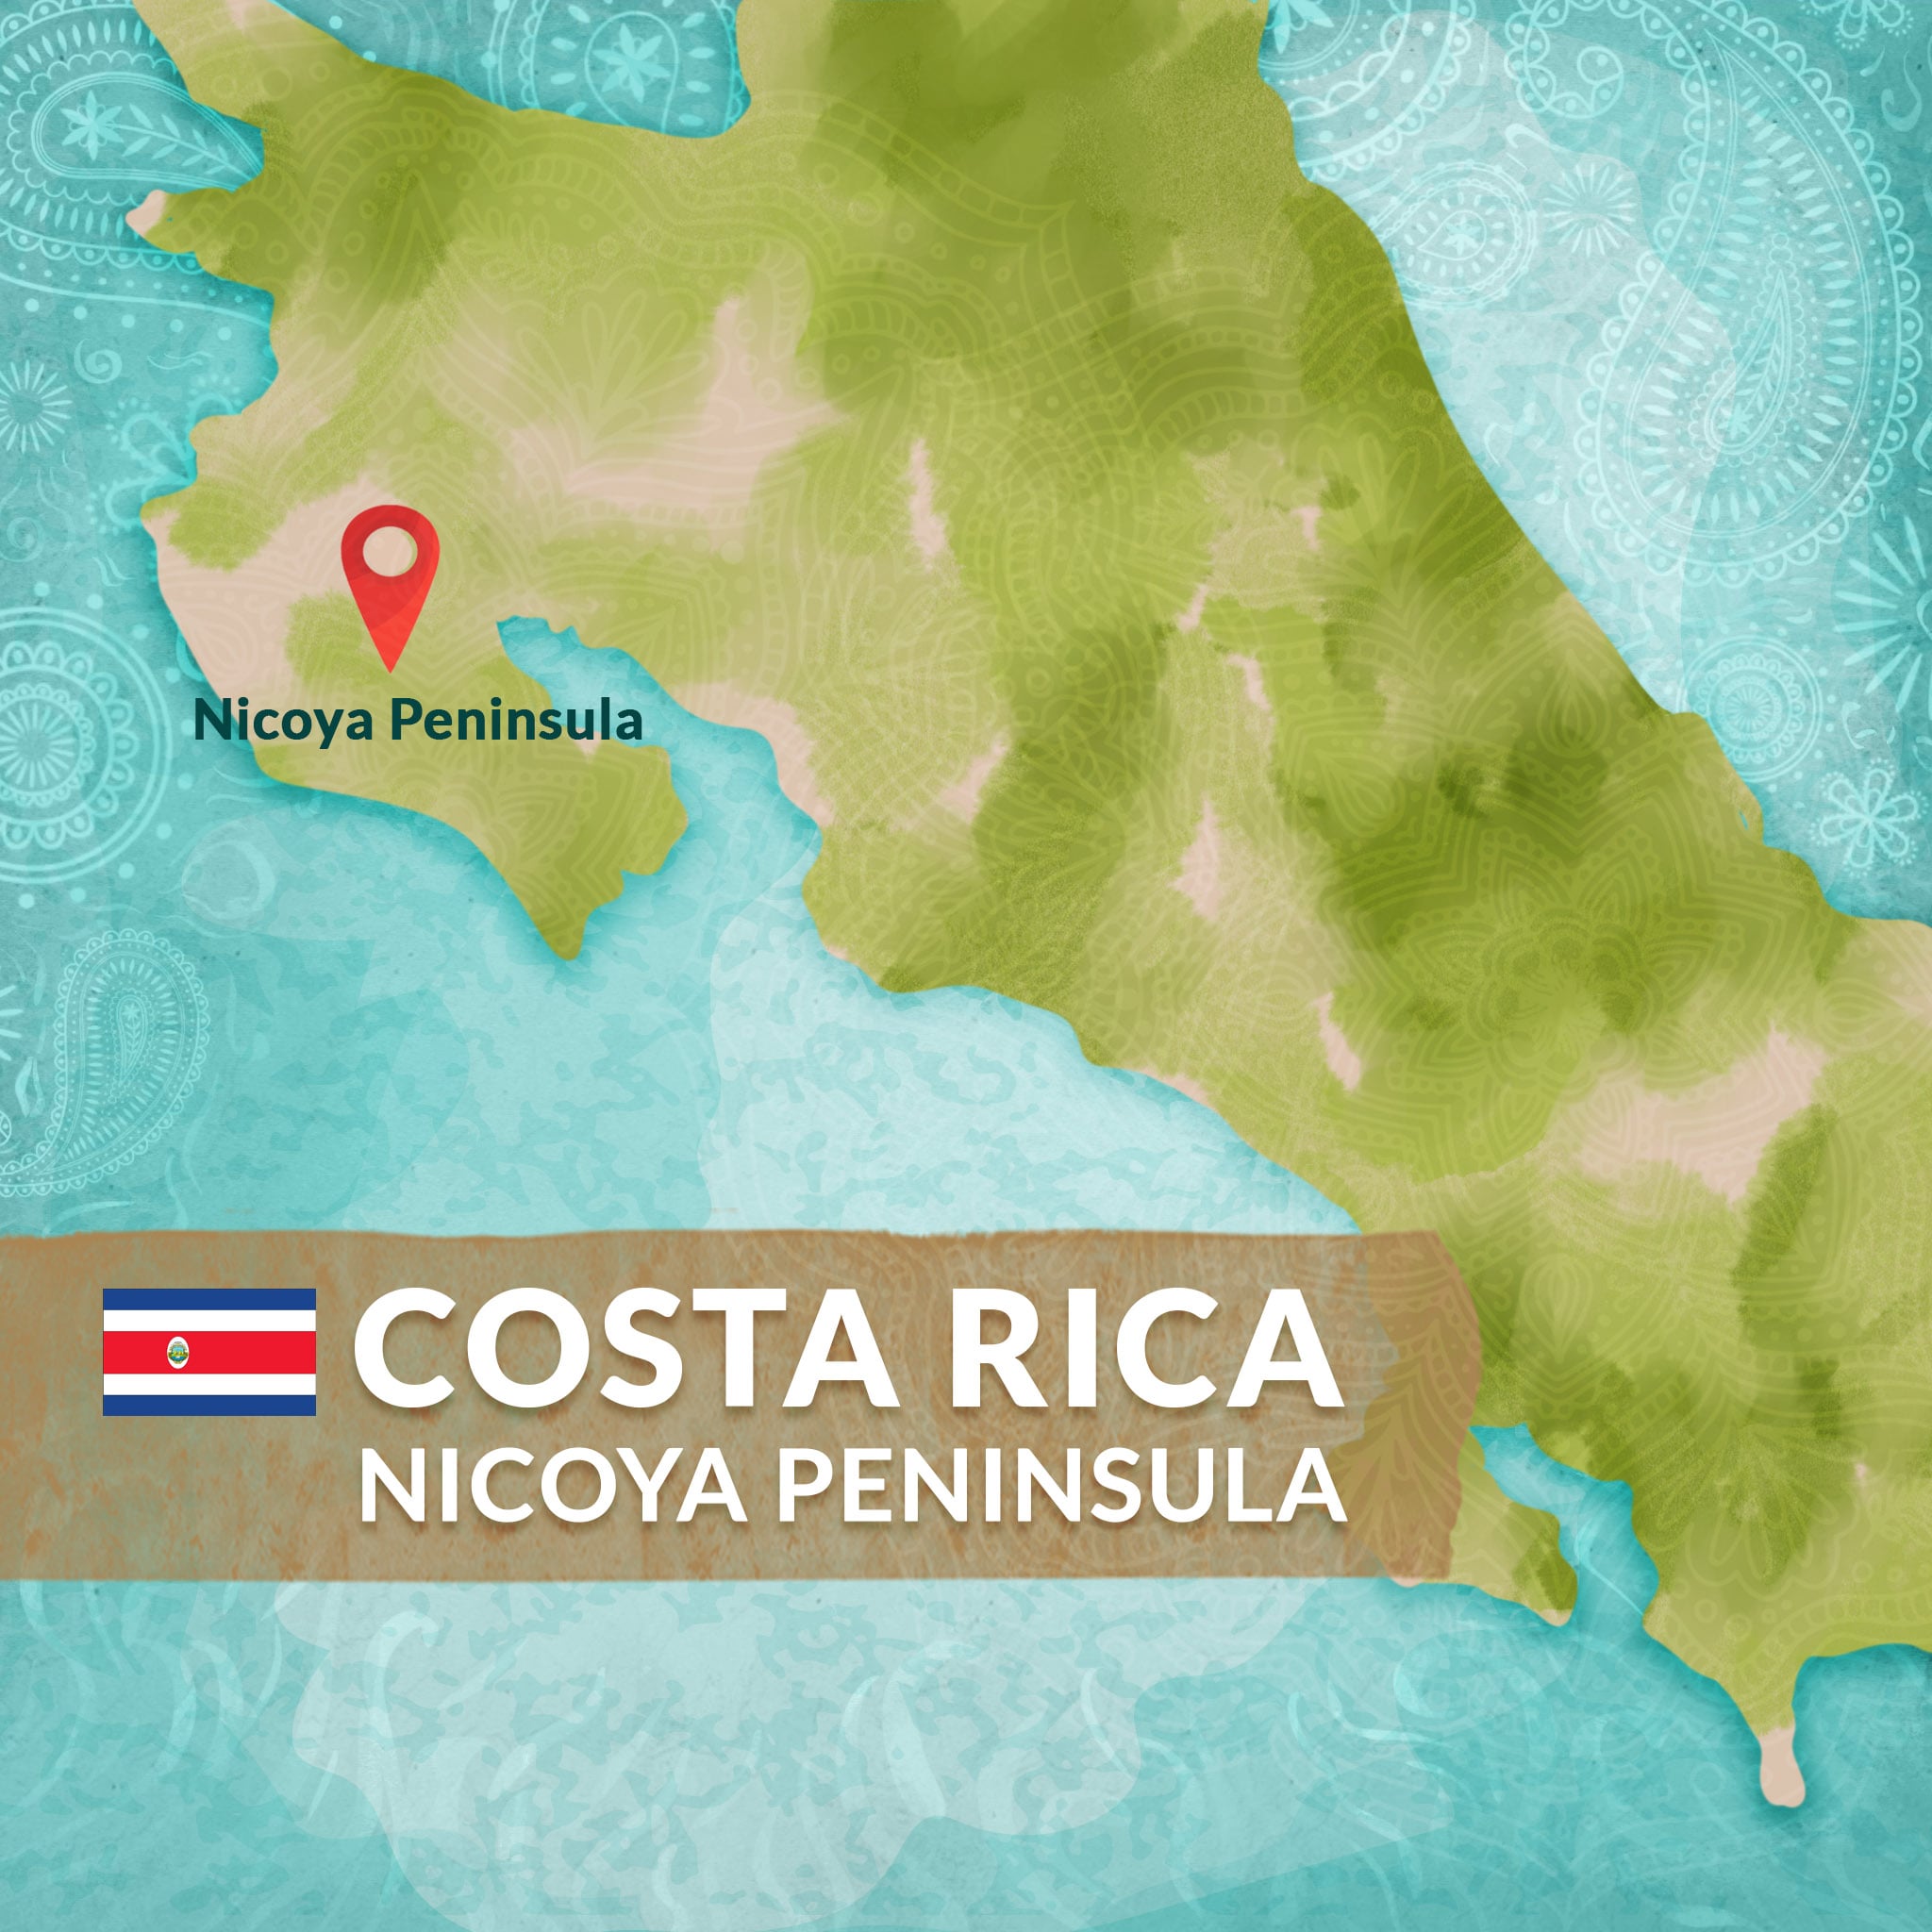 Blue Zones on map - Nicoya Peninsula, Costa Rica